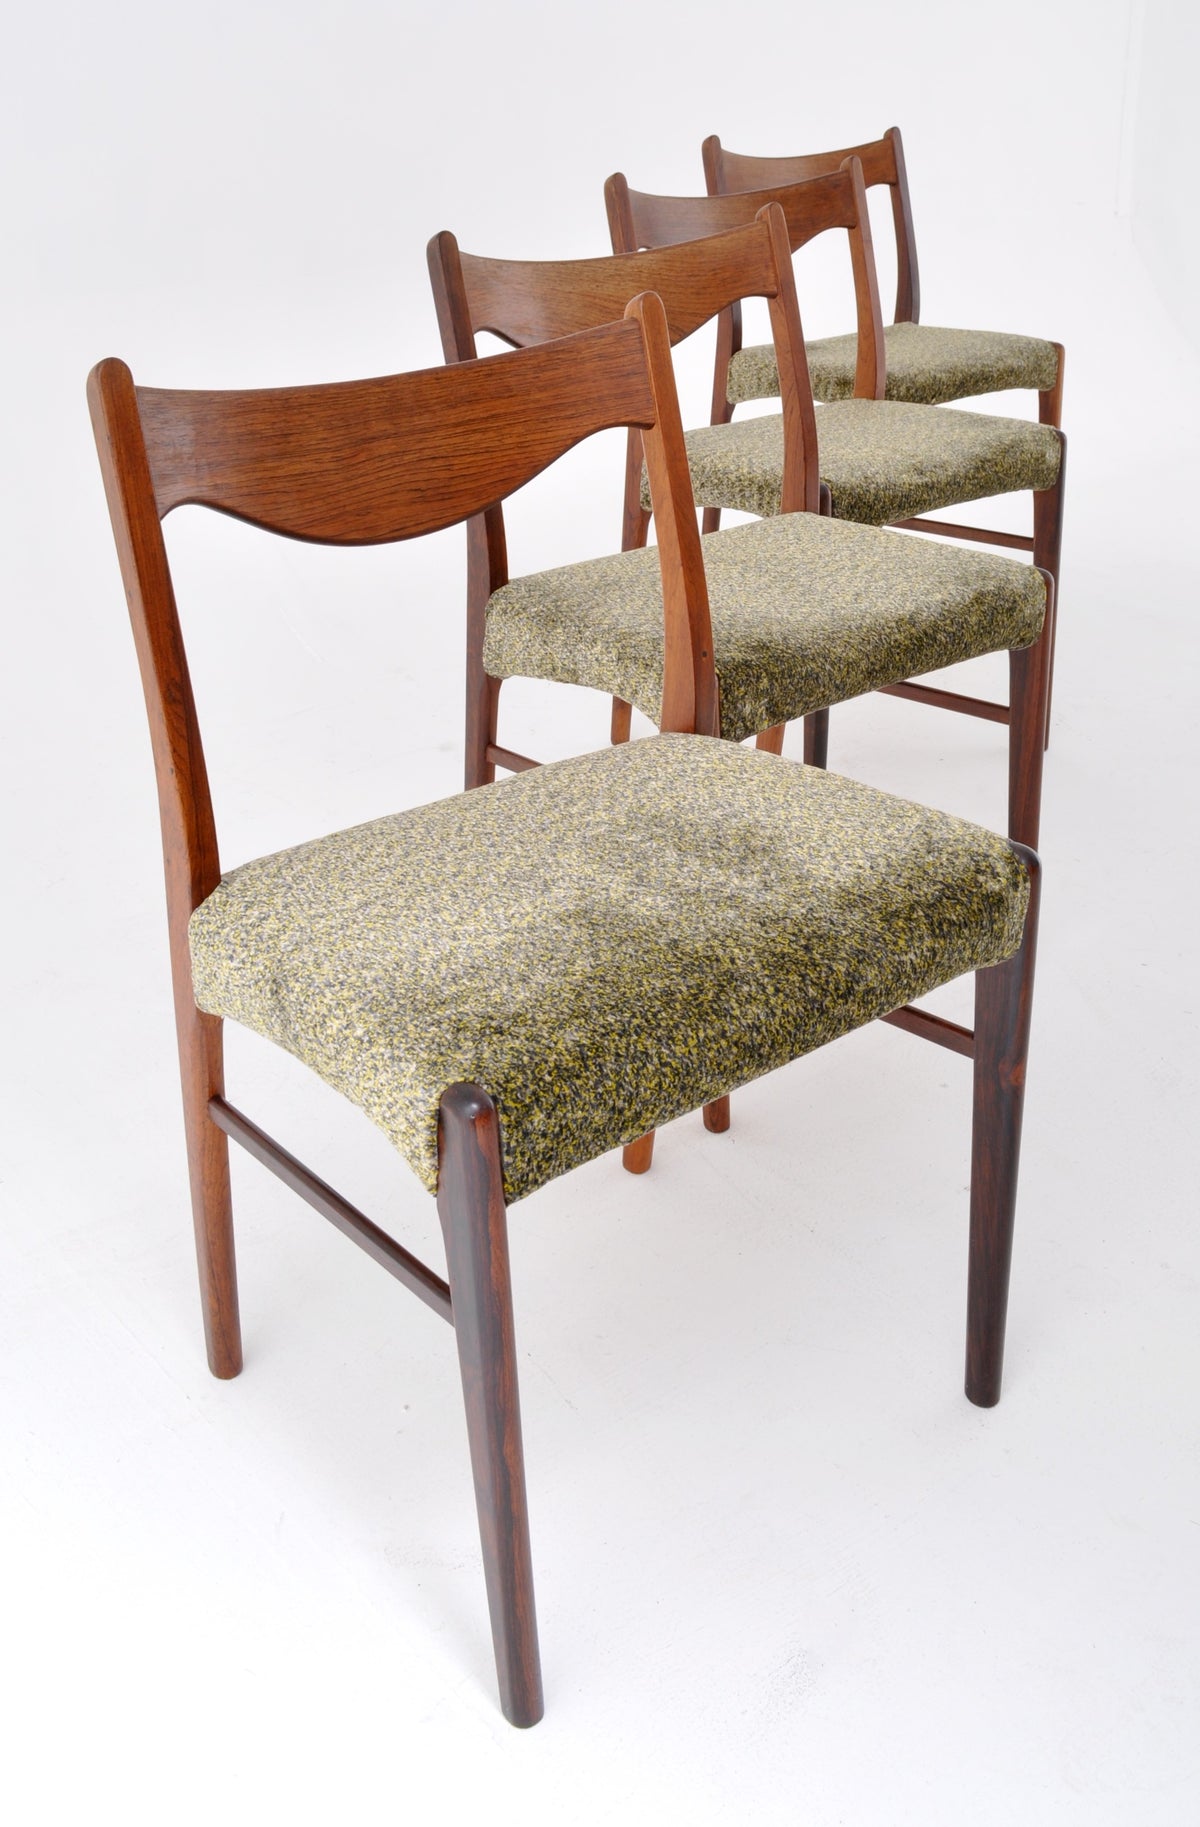 Set of 4 Danish Style Mid-Century Modern Dining Chairs, 1960s